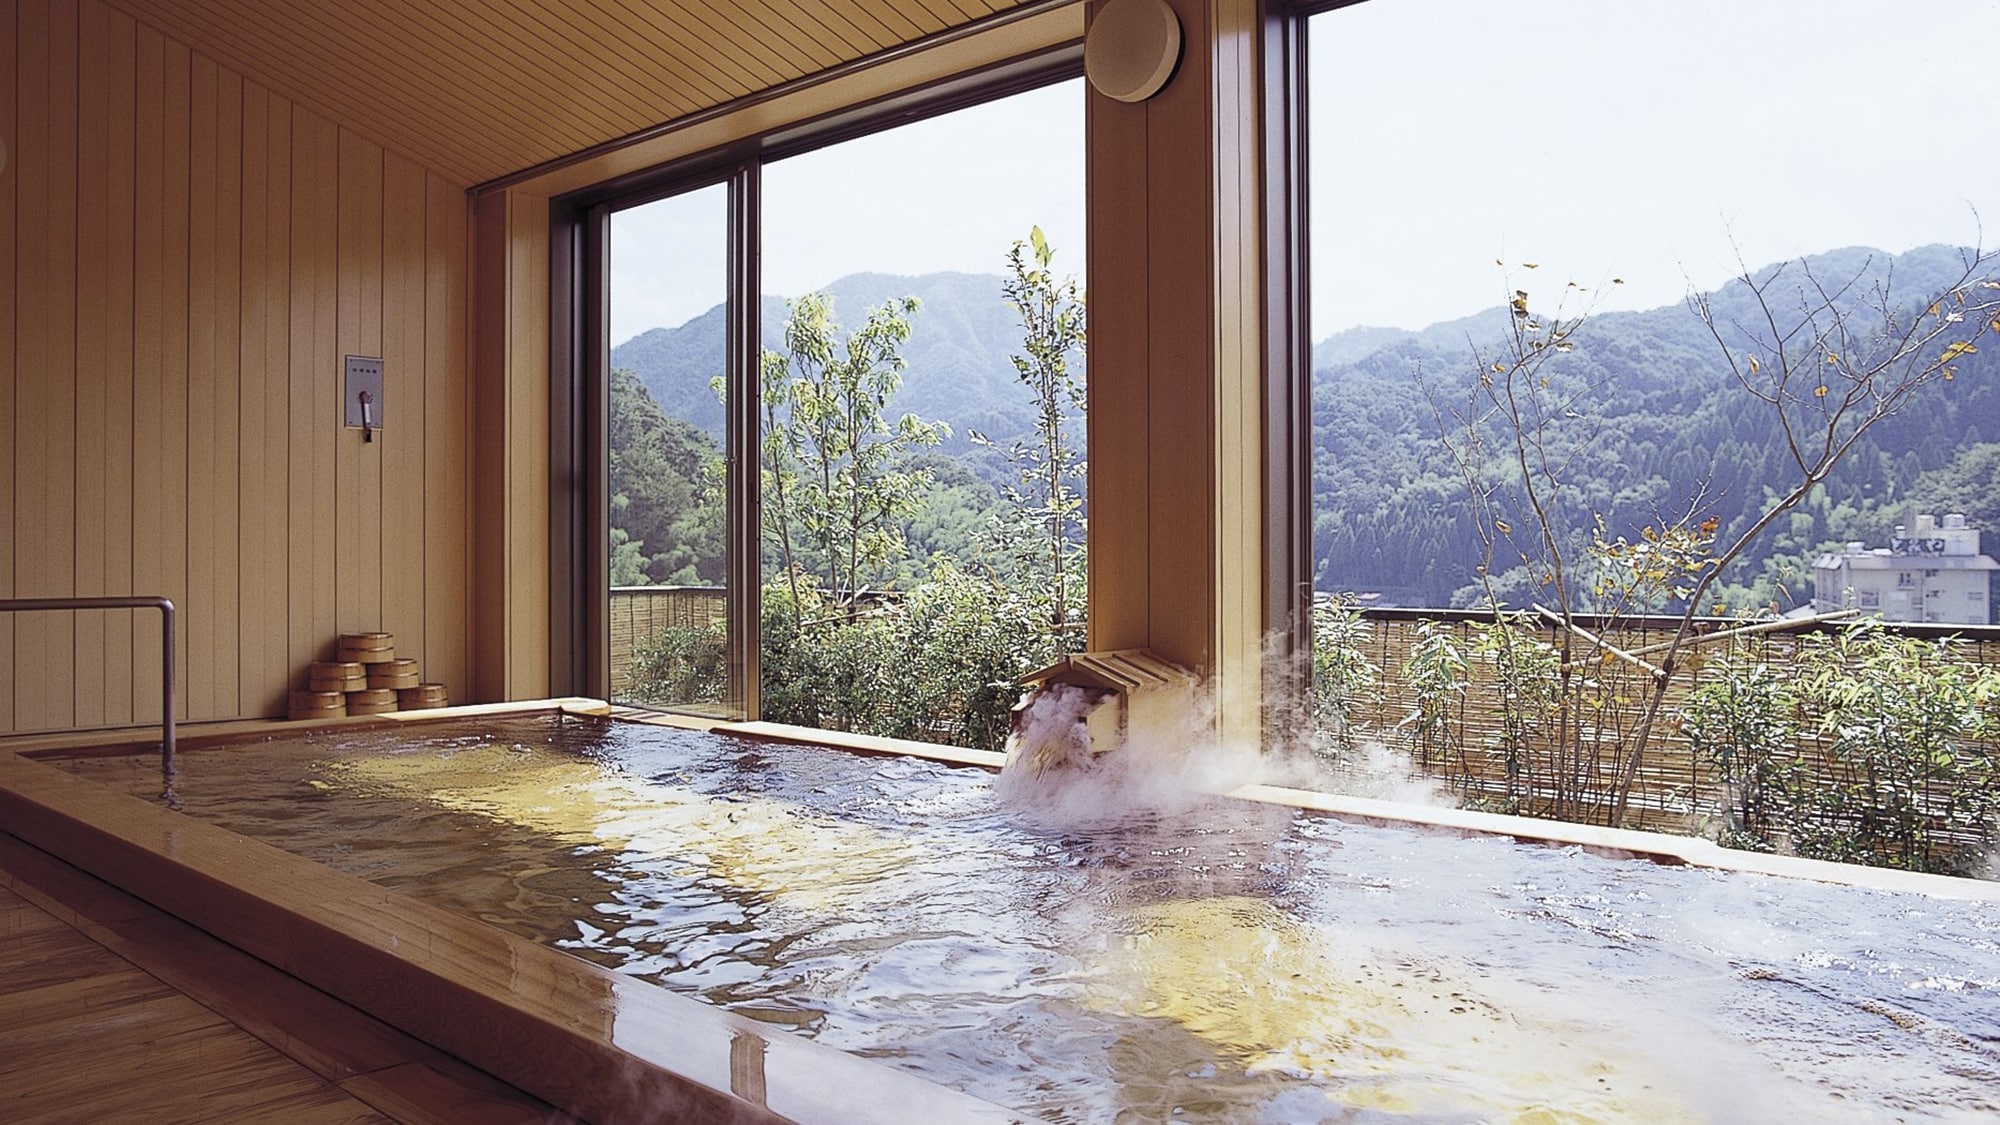 Observatory cypress bath, peaceful hot water